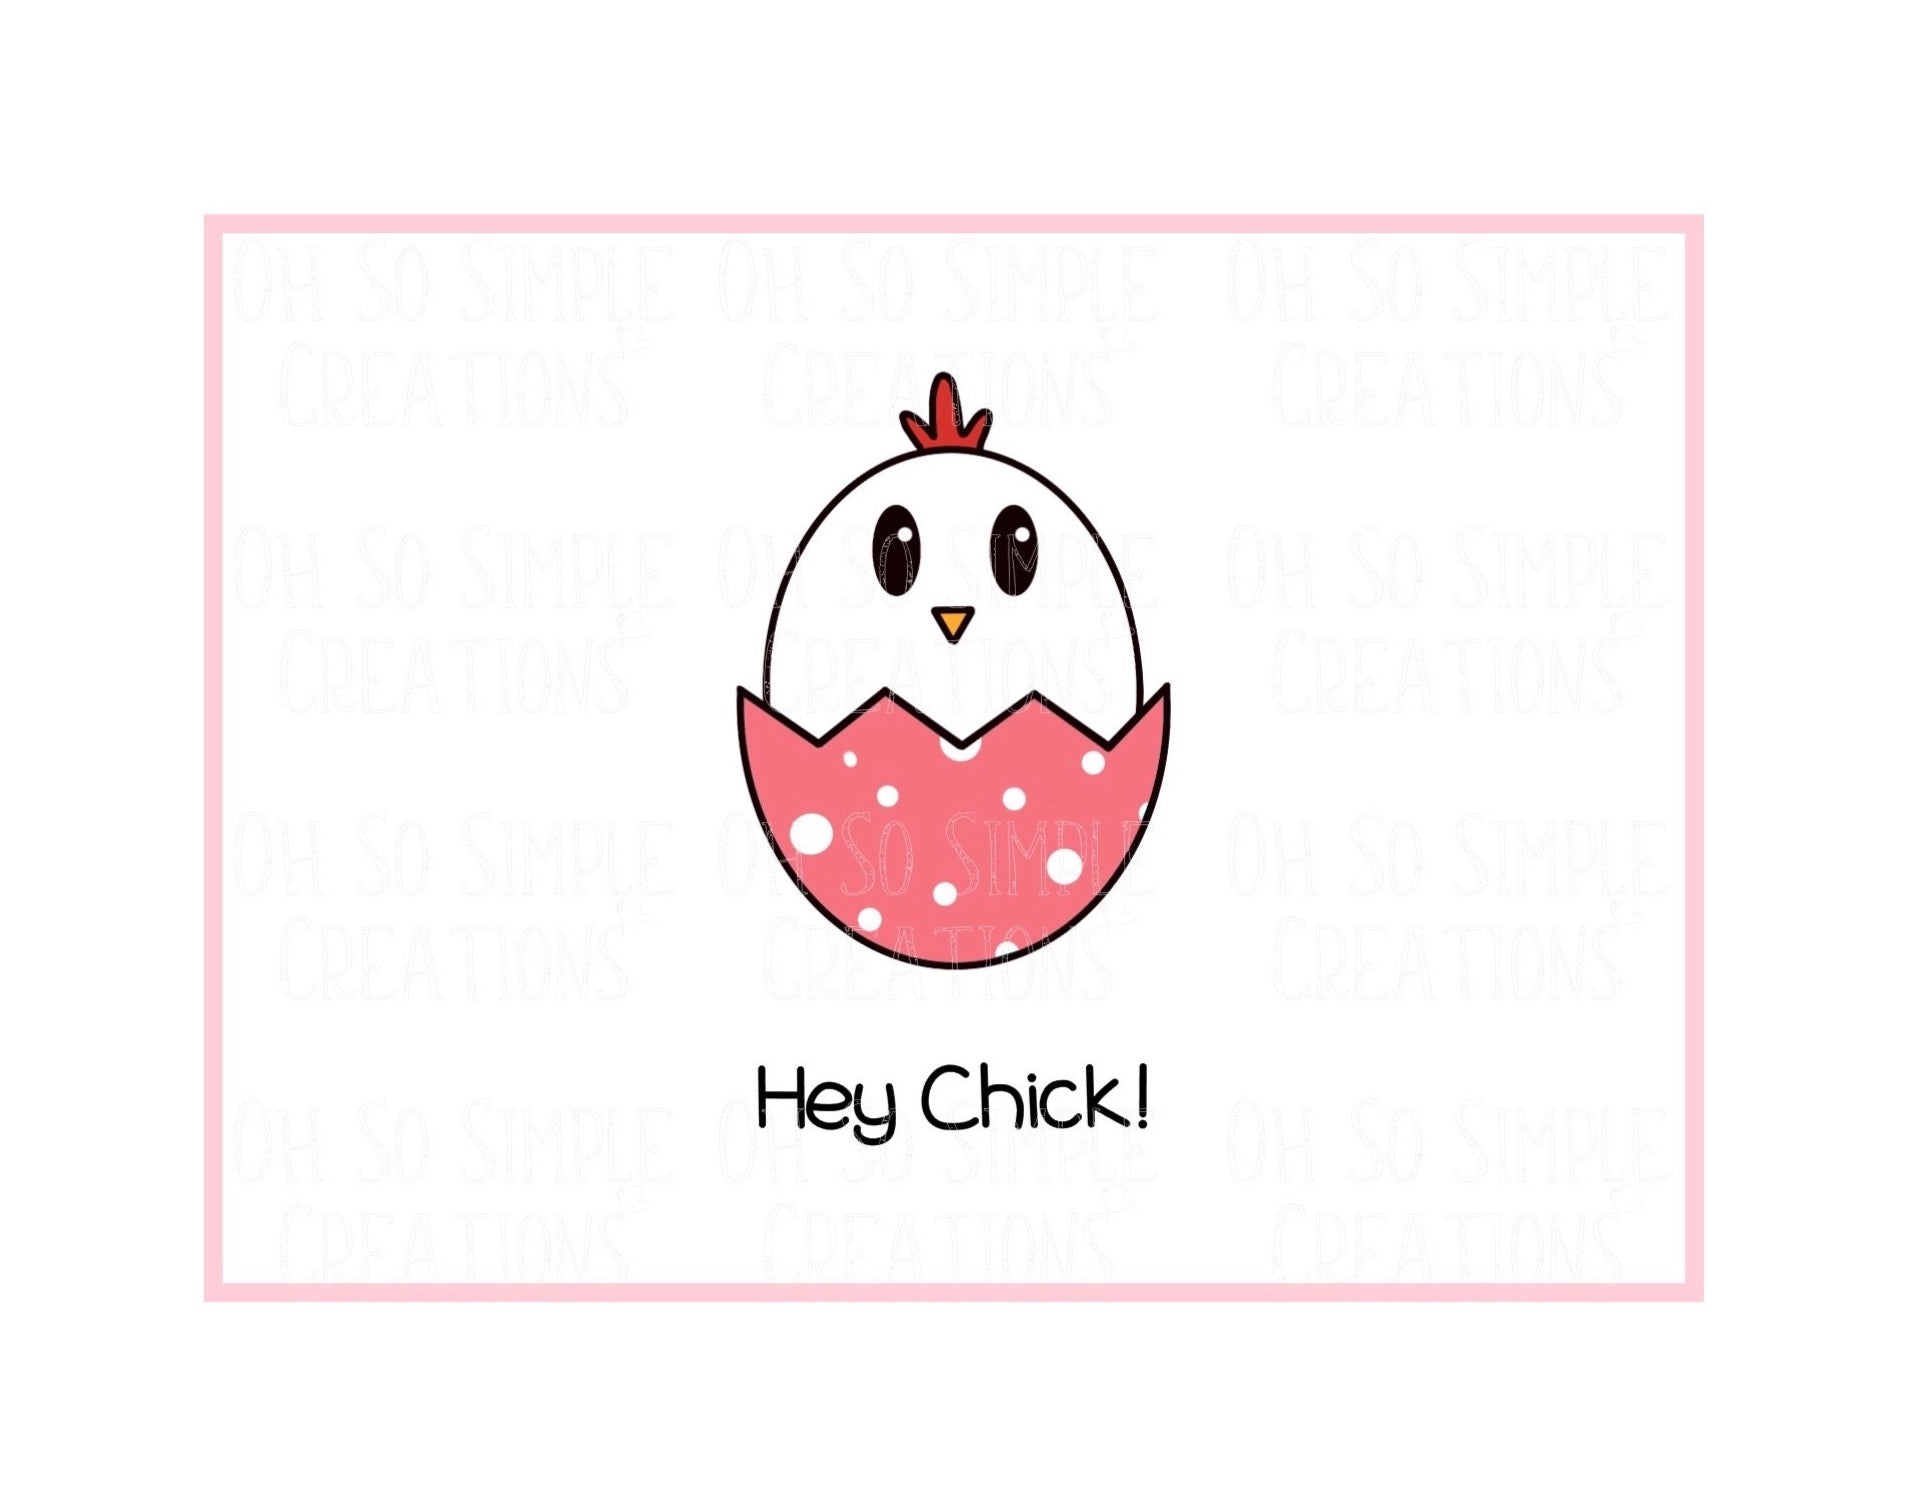 Hey Chick (White) Mini Greeting Card